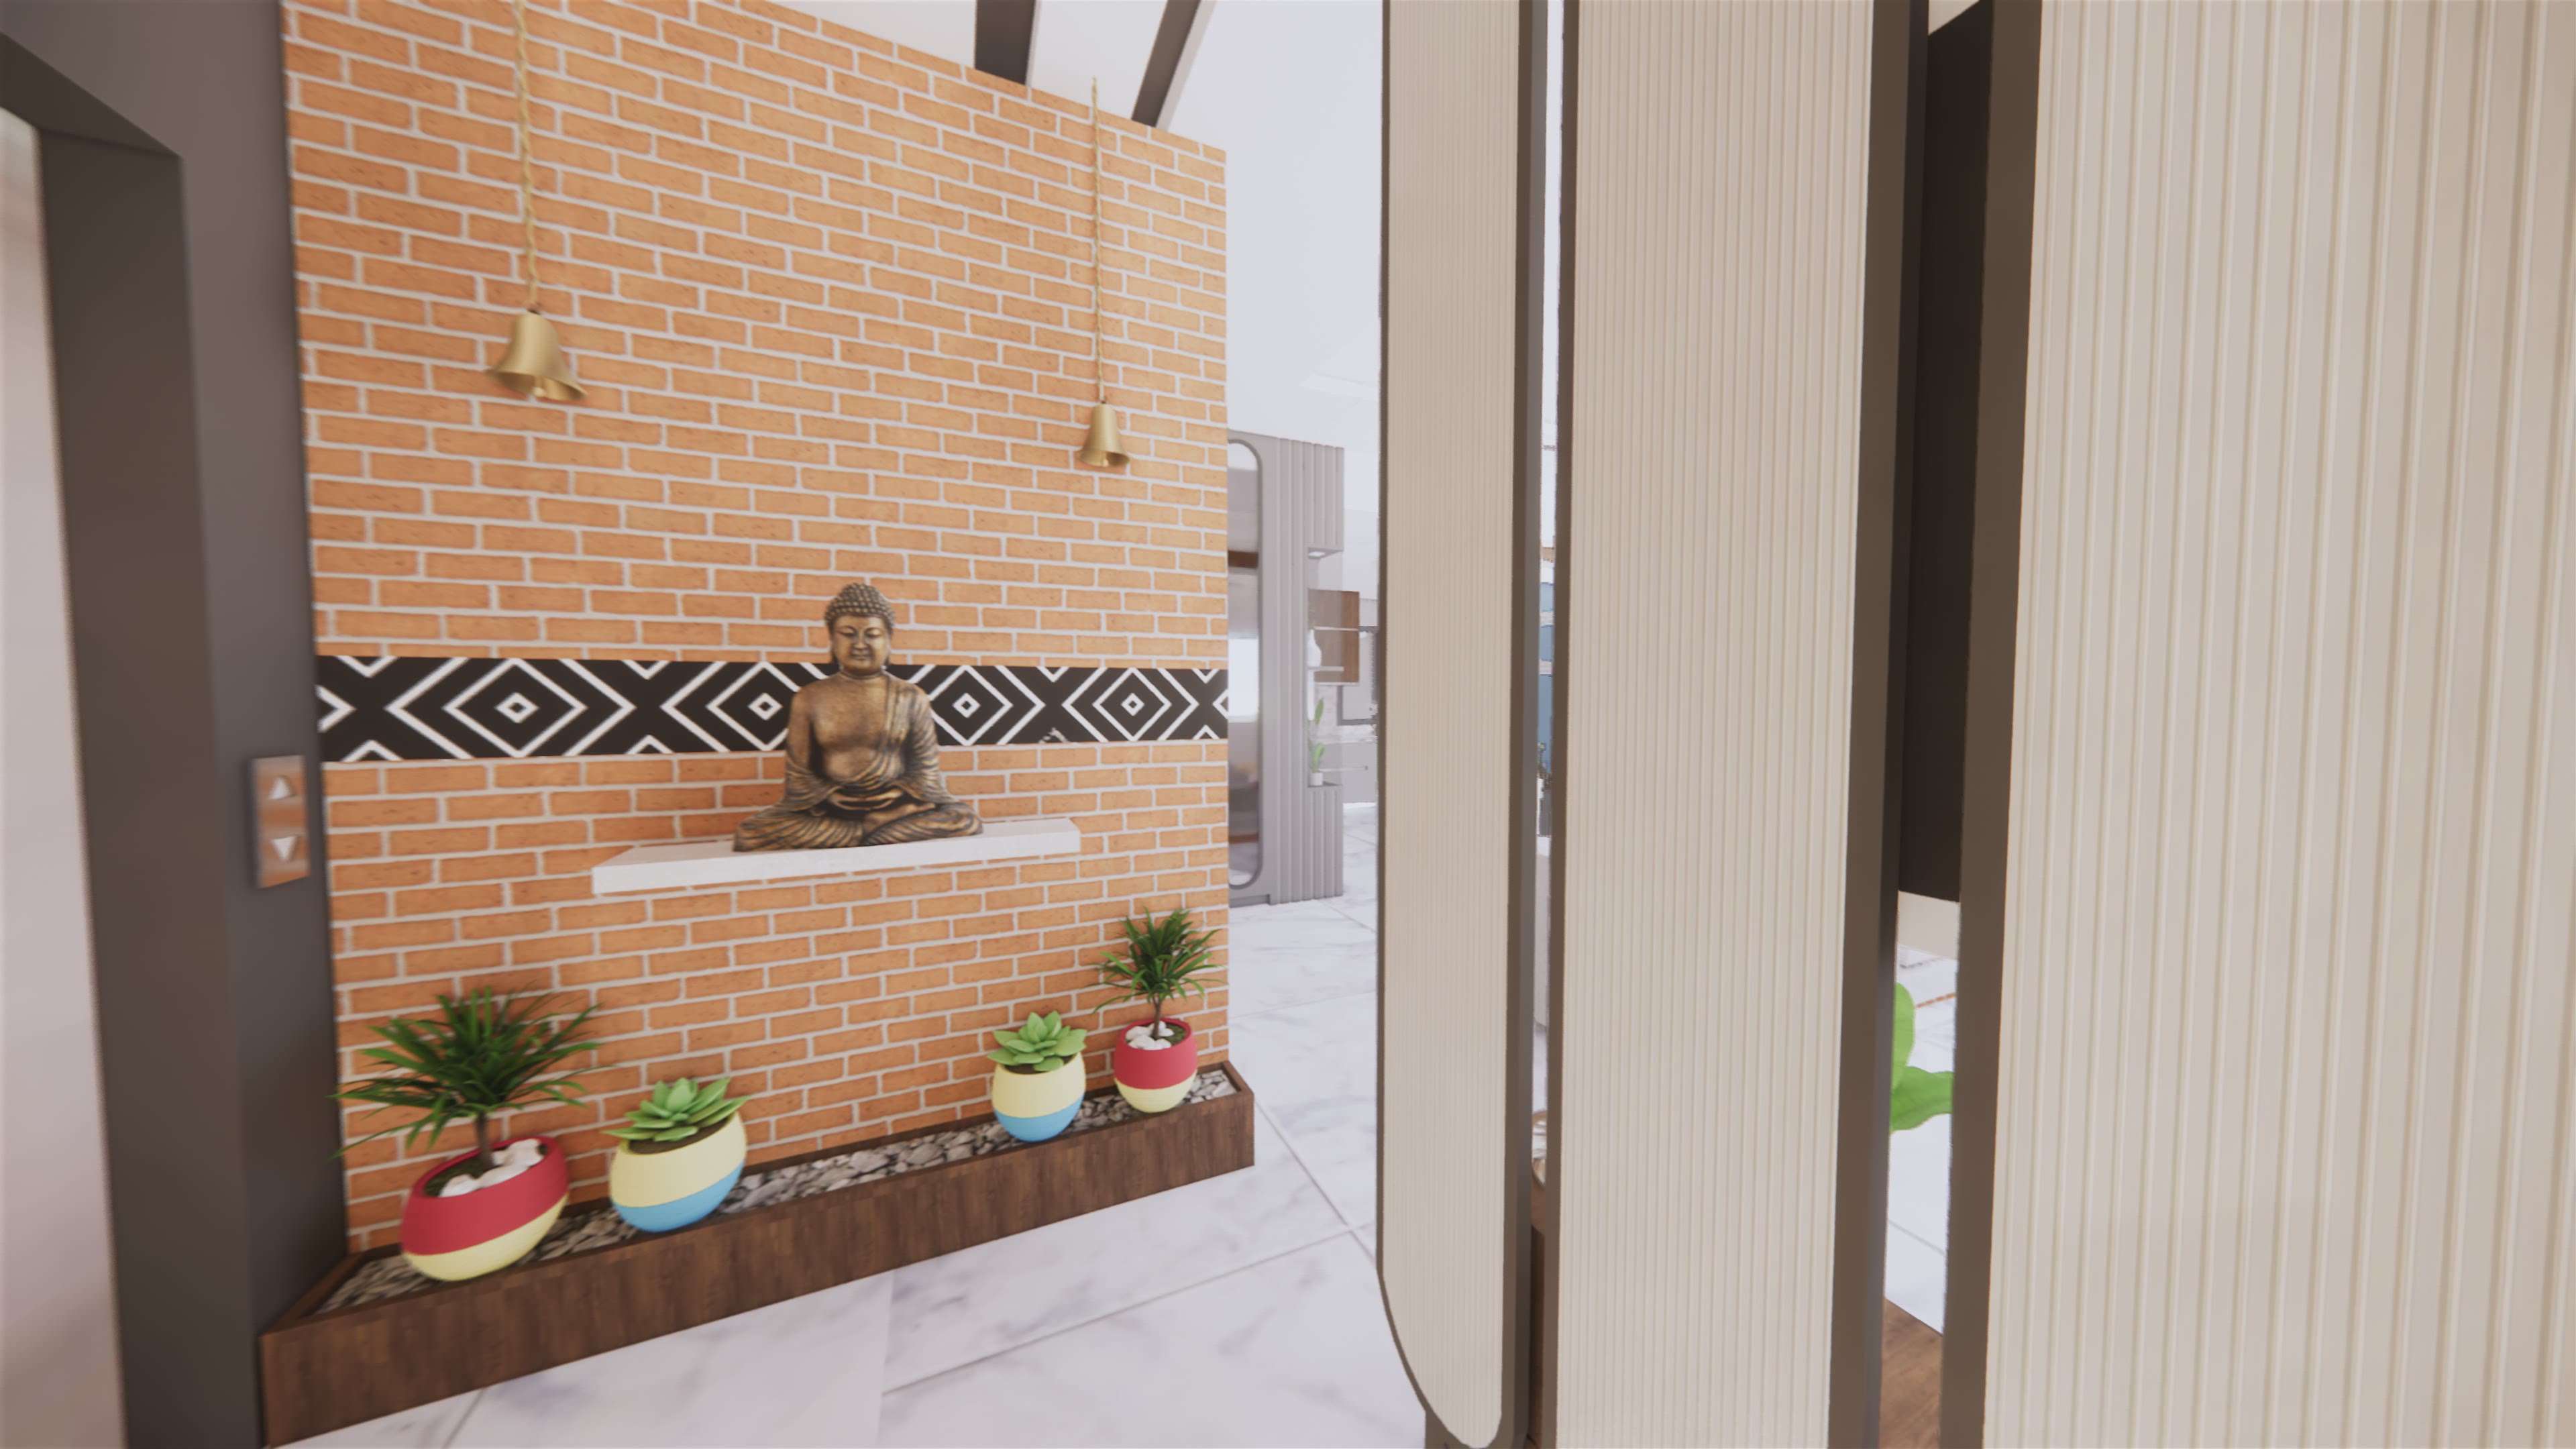 #walkthrough_animations_video_rendering #architecturedesigns #InteriorDesigner✔️✔️ 
#LivingroomDesigns #buddhastatue